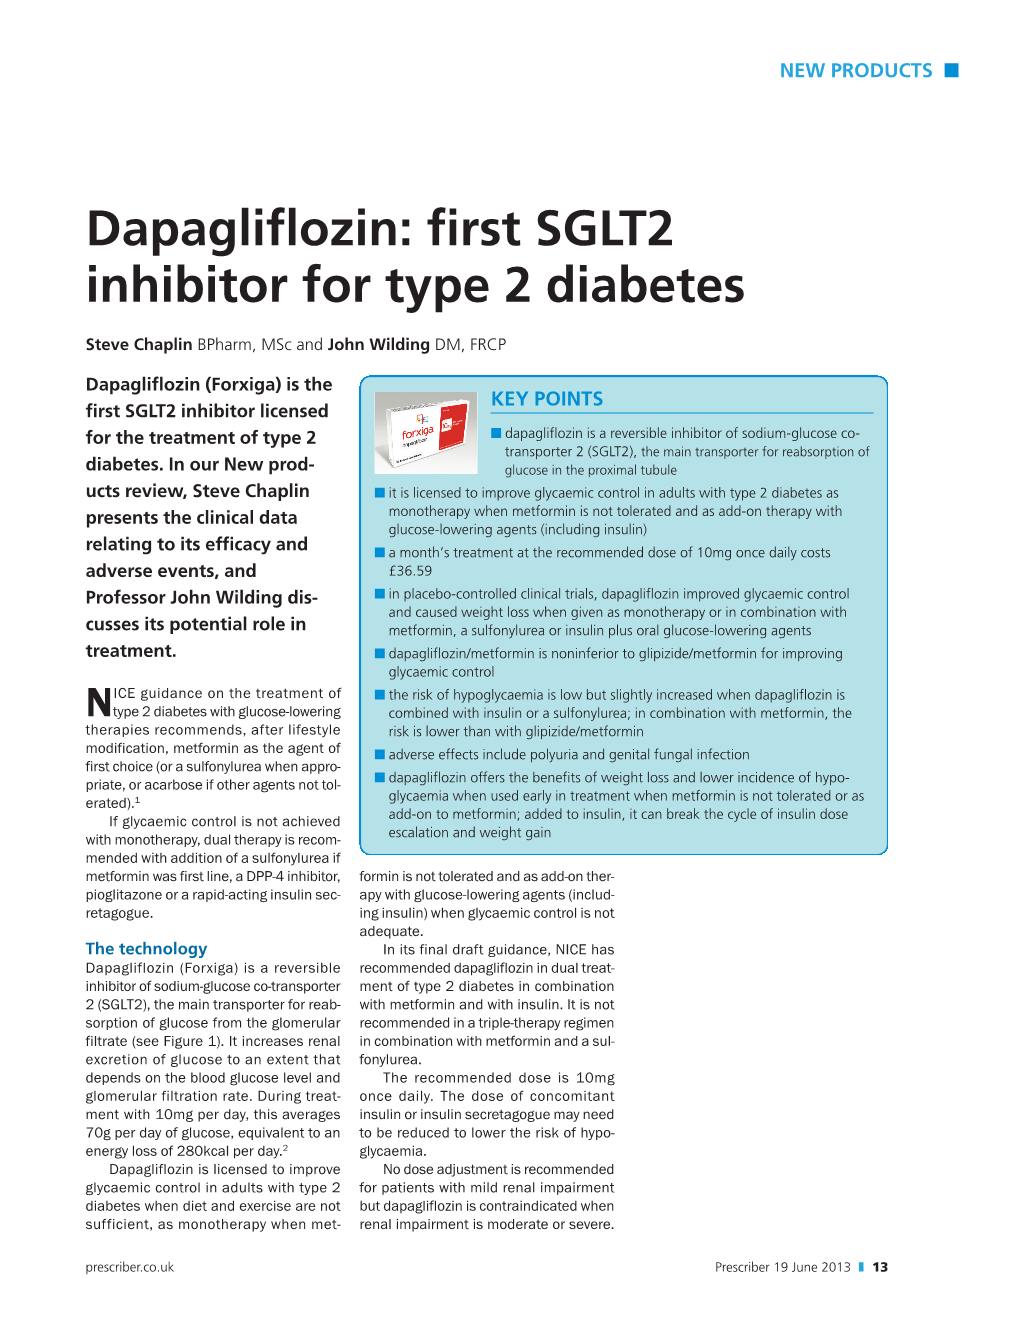 Dapagliflozin: First SGLT2 Inhibitor for Type 2 Diabetes